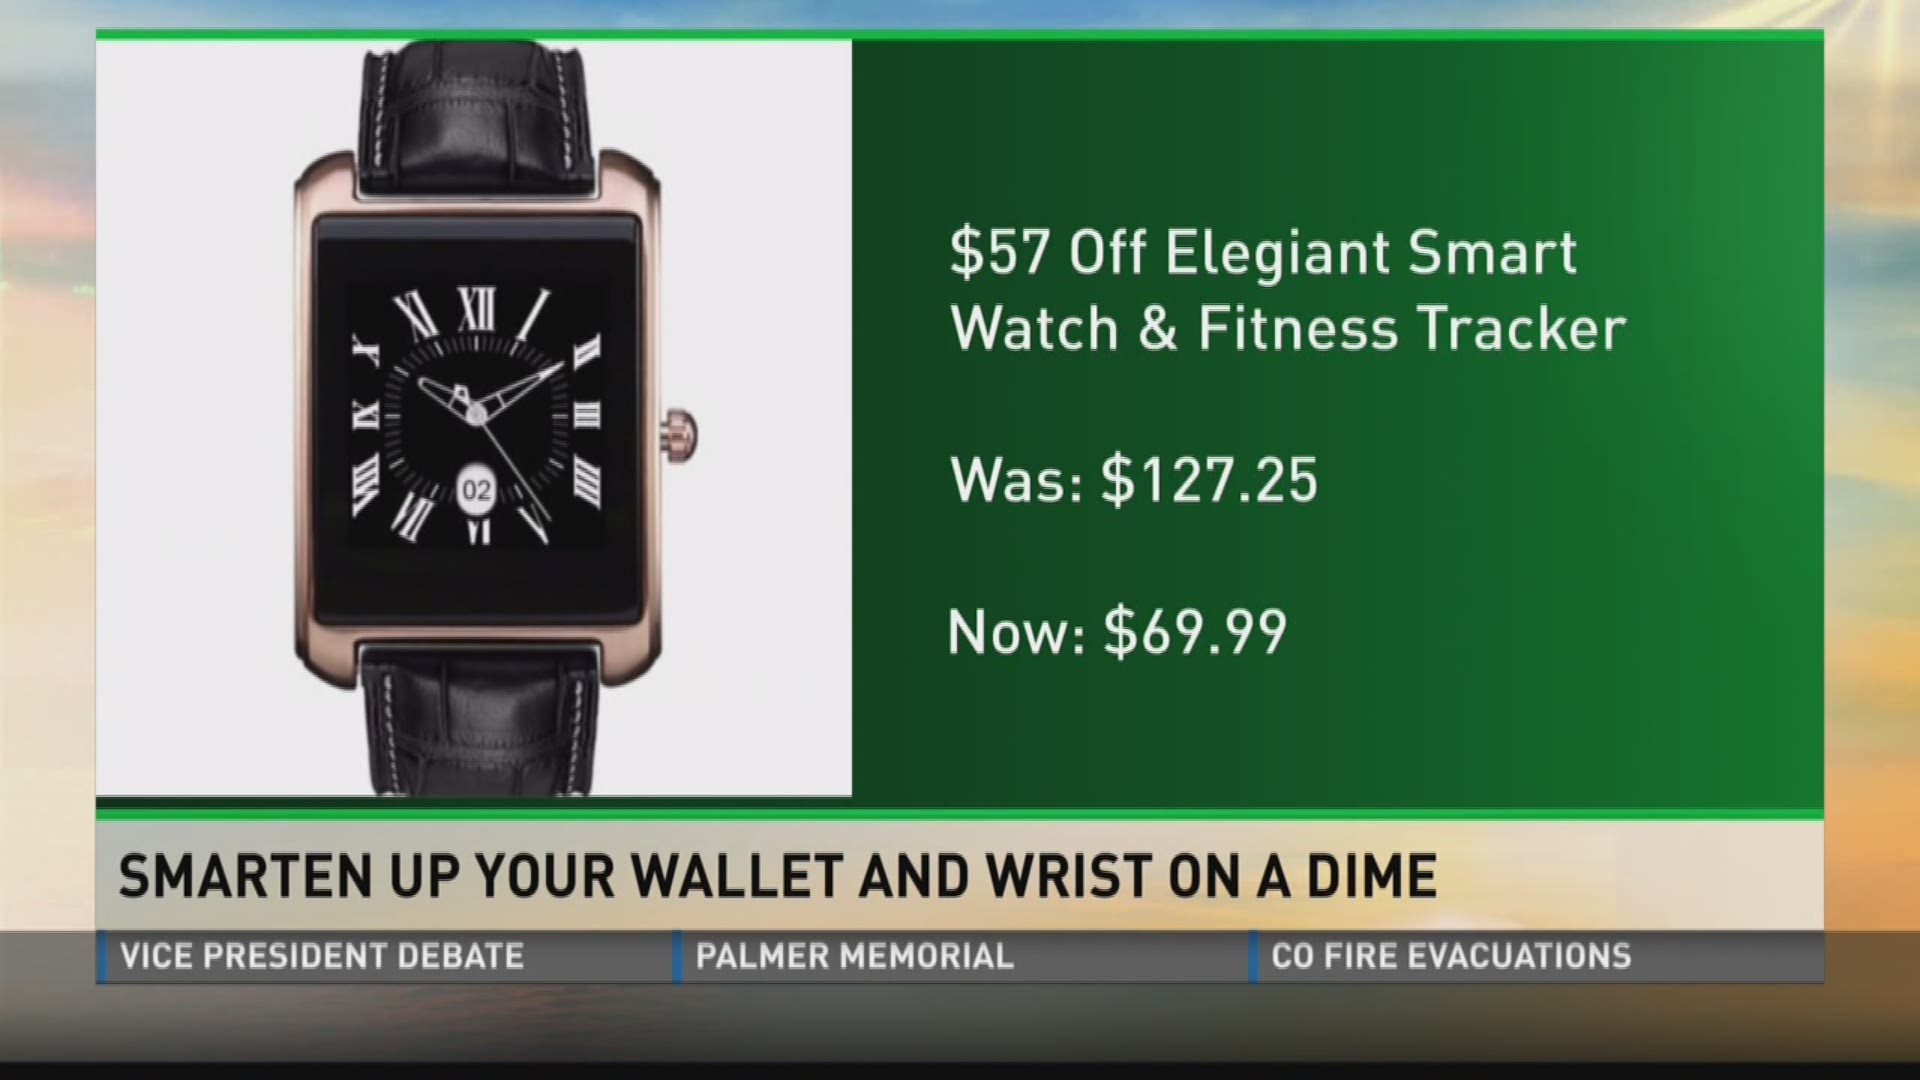 Money man Matt Granite shows how to save on a smartphone fitness tracker.